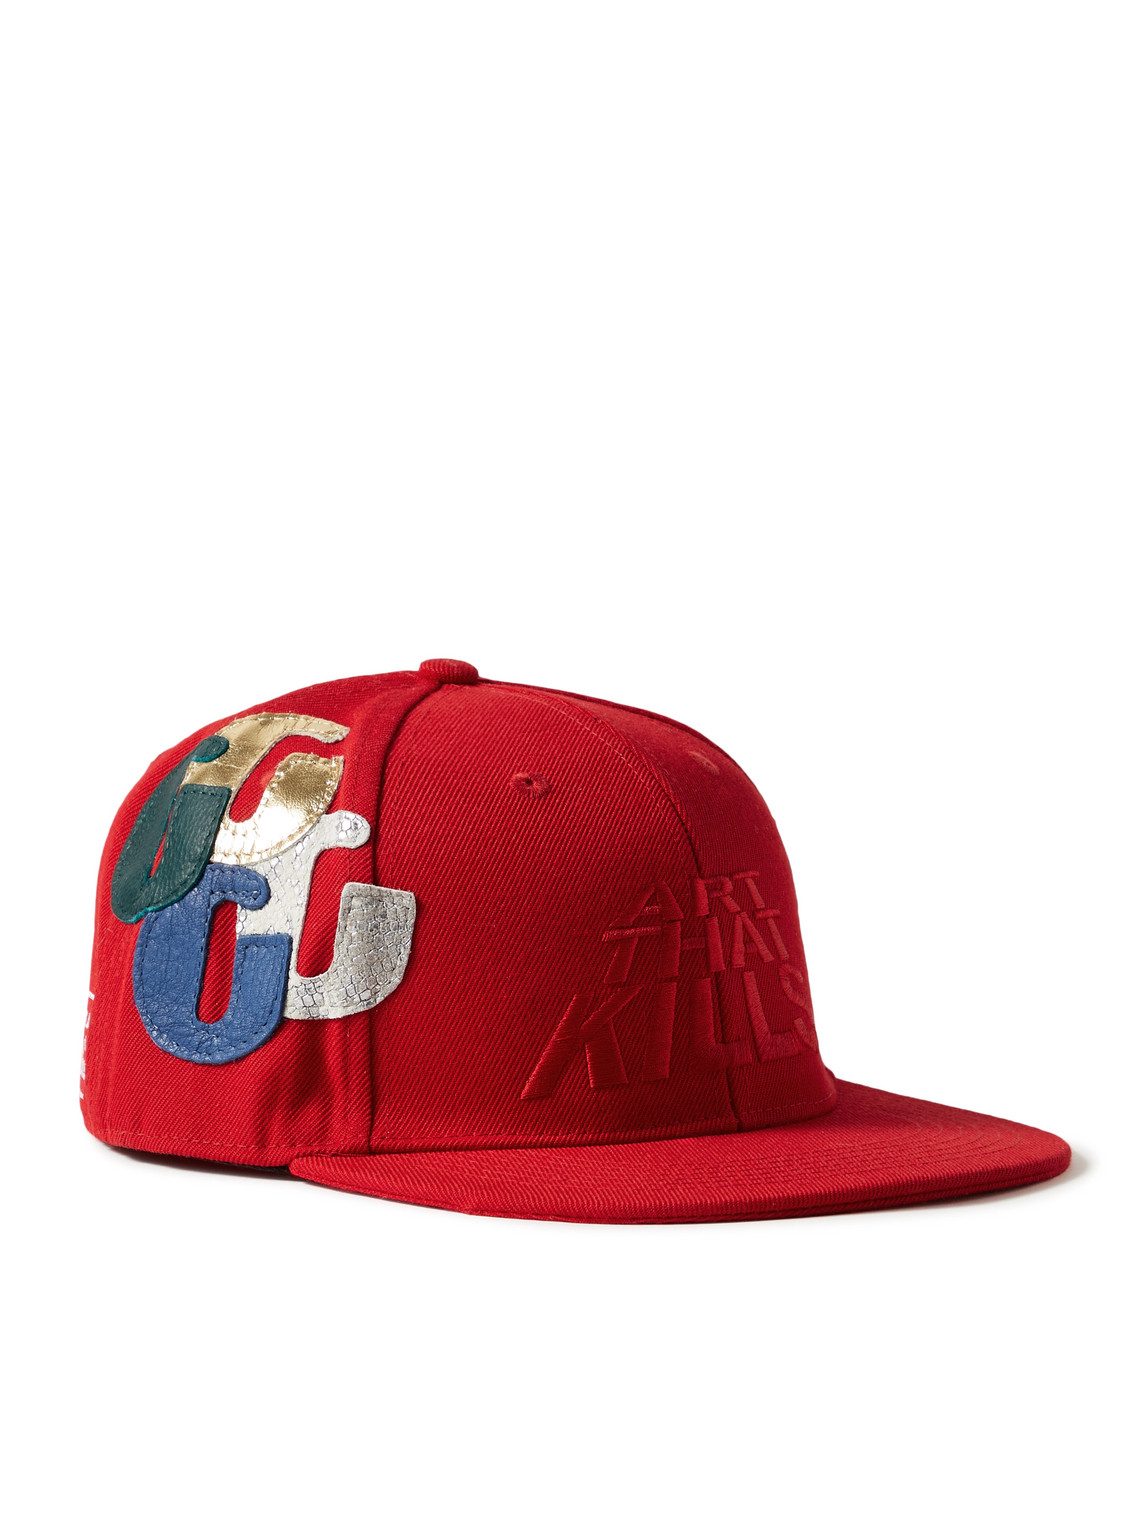 ATK G-Patch Embellished Cotton-Twill Baseball Cap